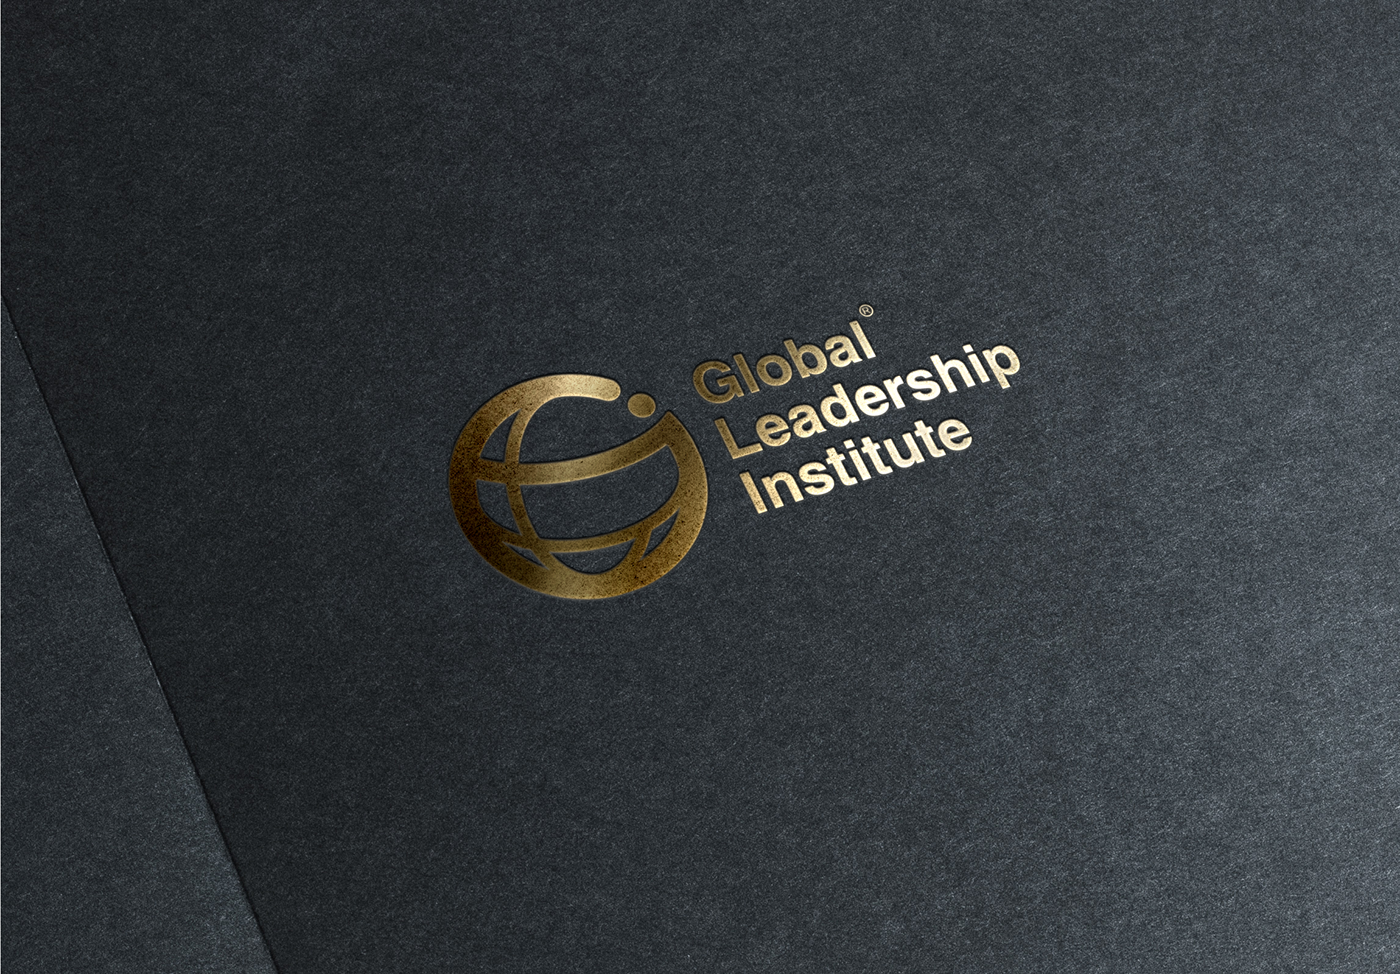 GLI Global Leadership Institute